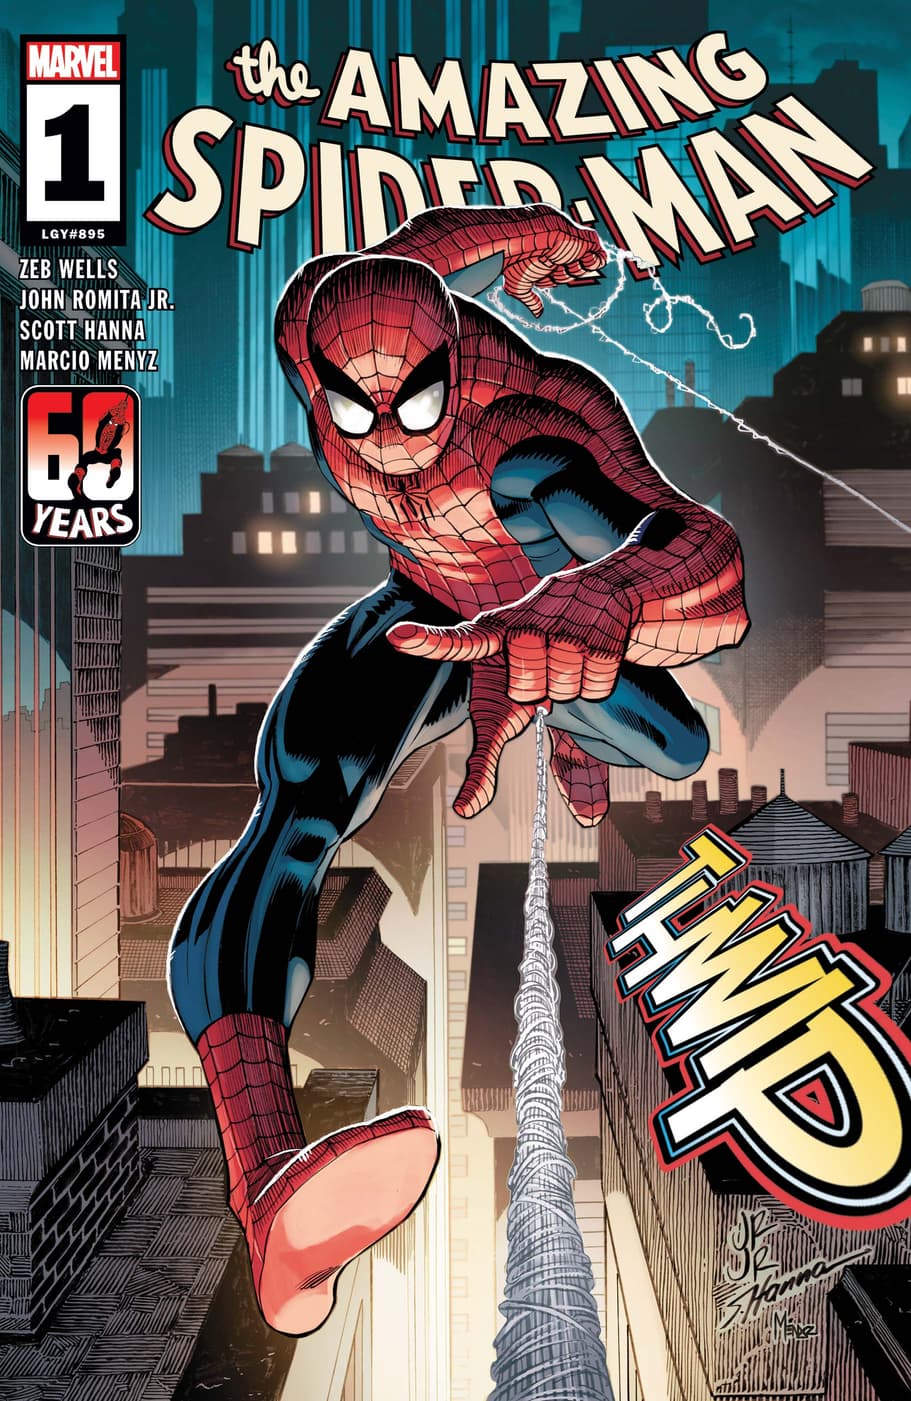 AMAZING SPIDER-MAN #1 cover by John Romita Jr.